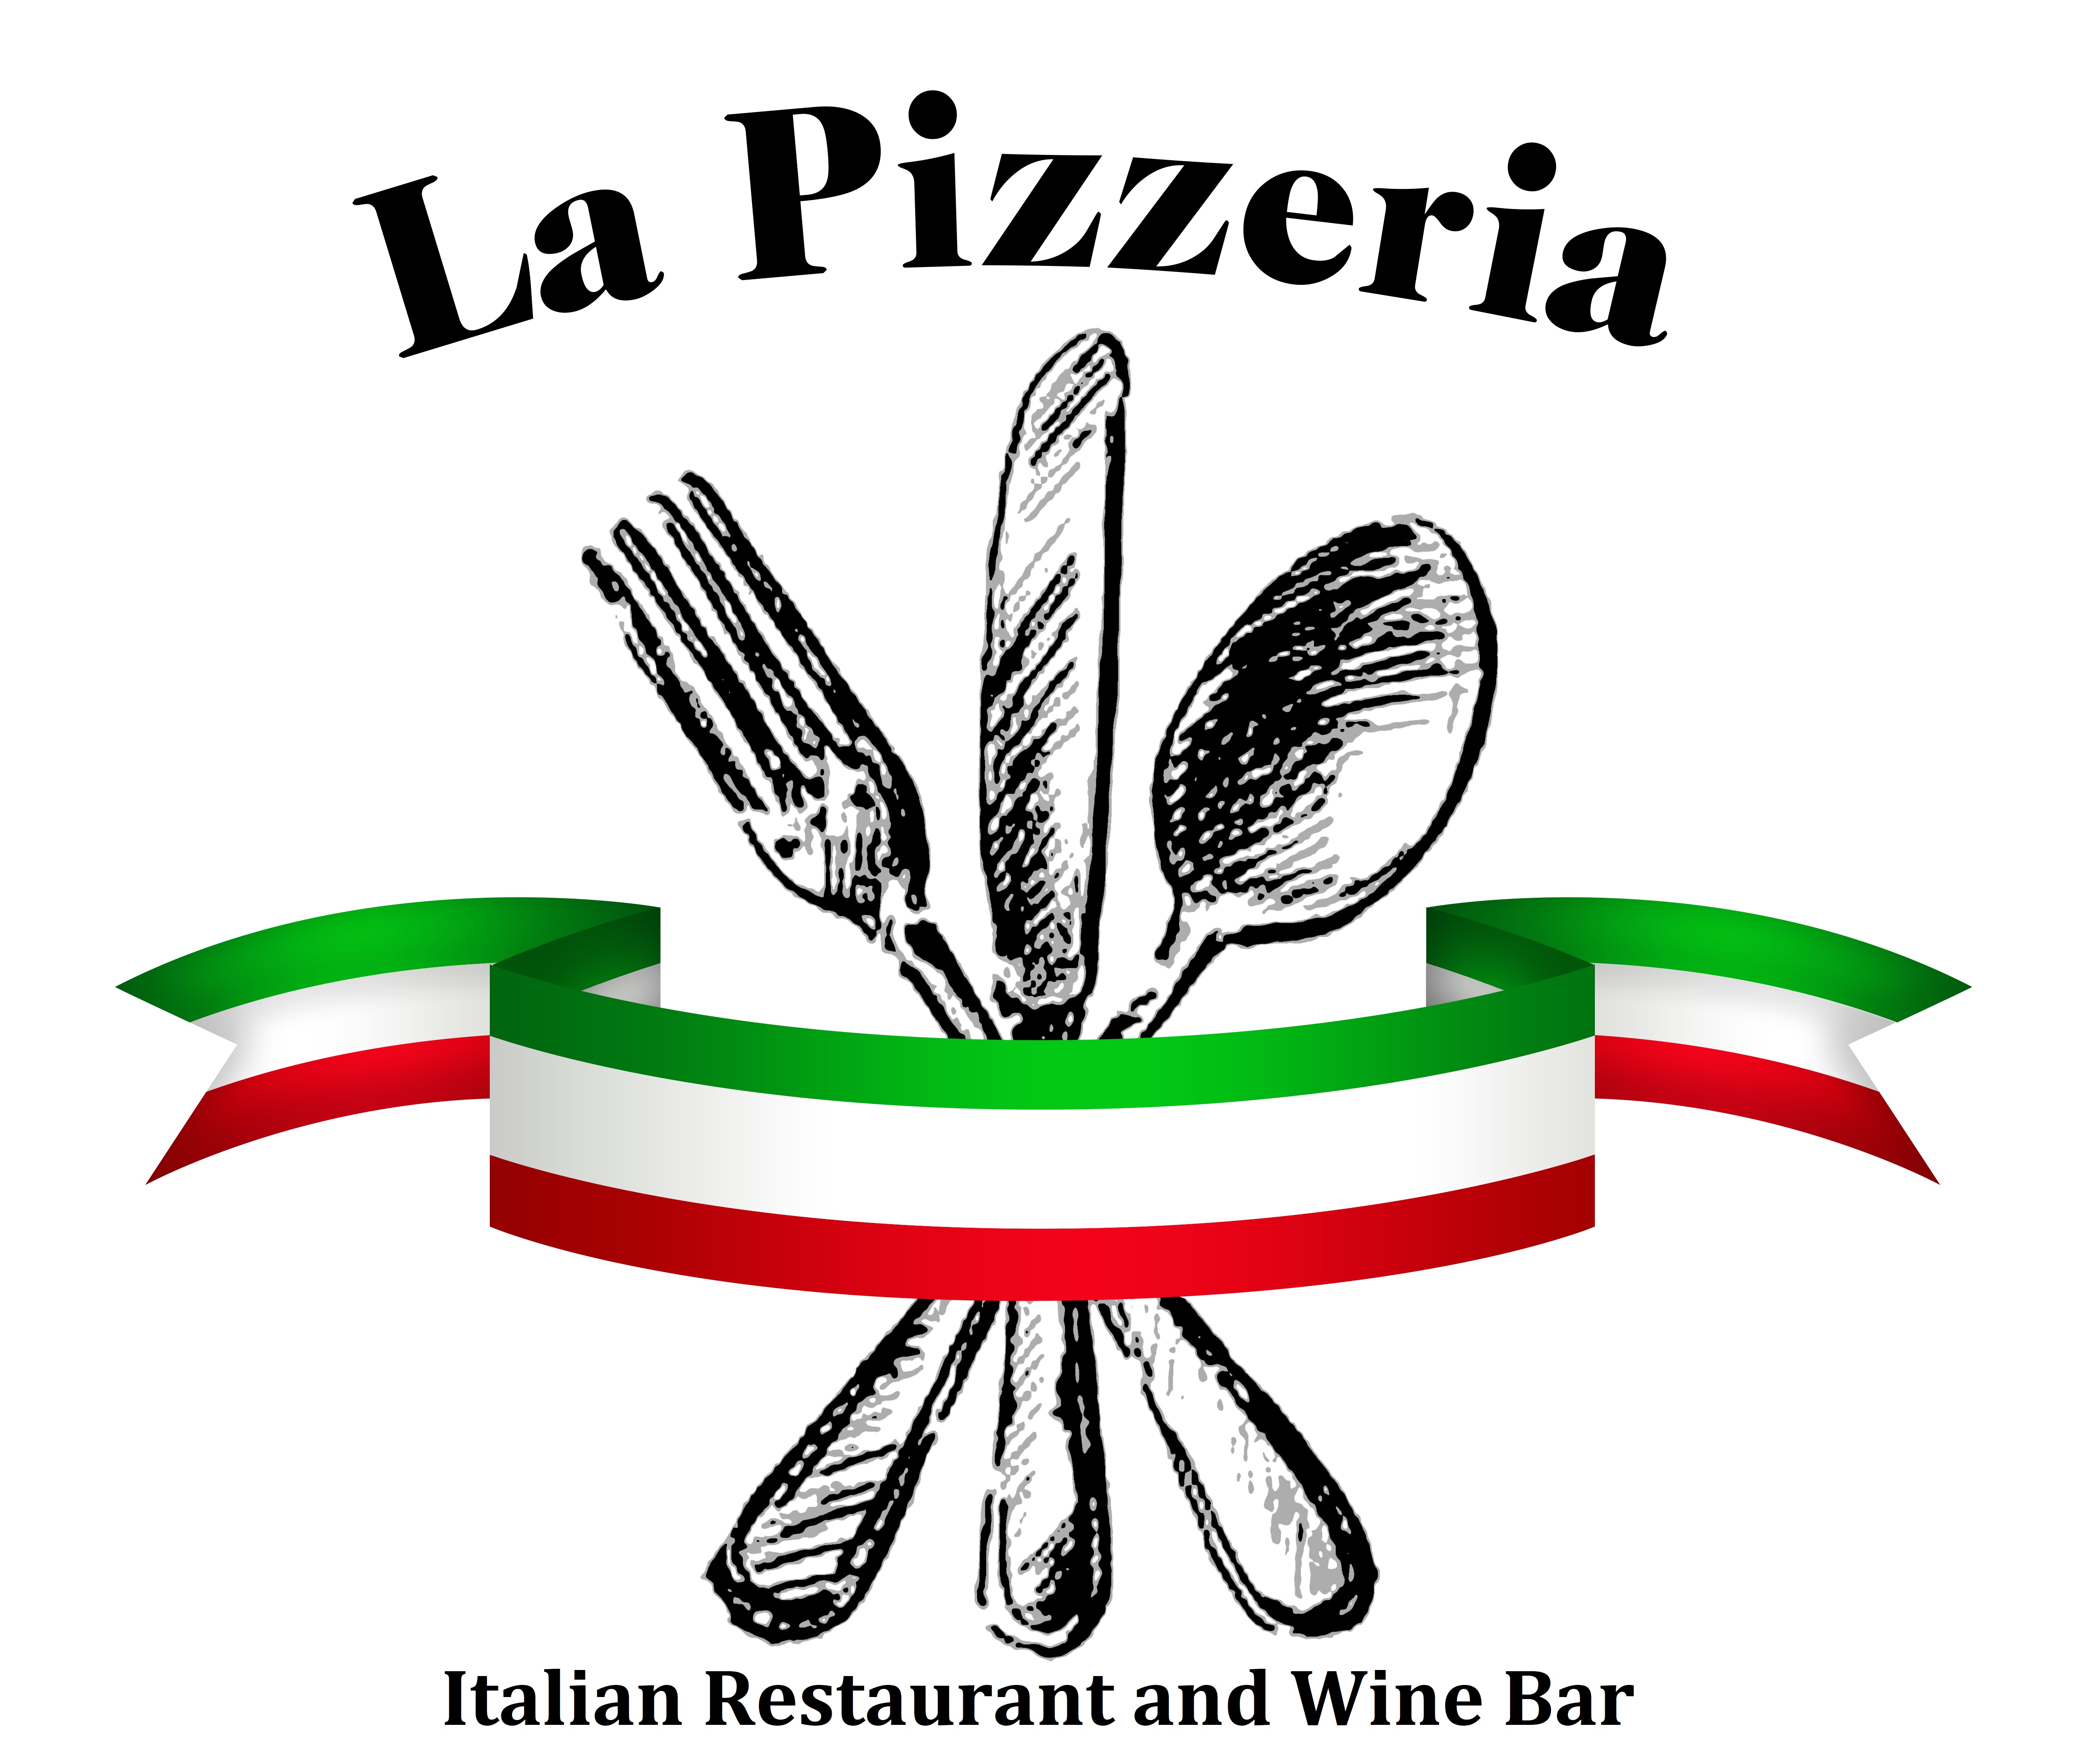 La Pizzeria Campbell - Italian Restaurant